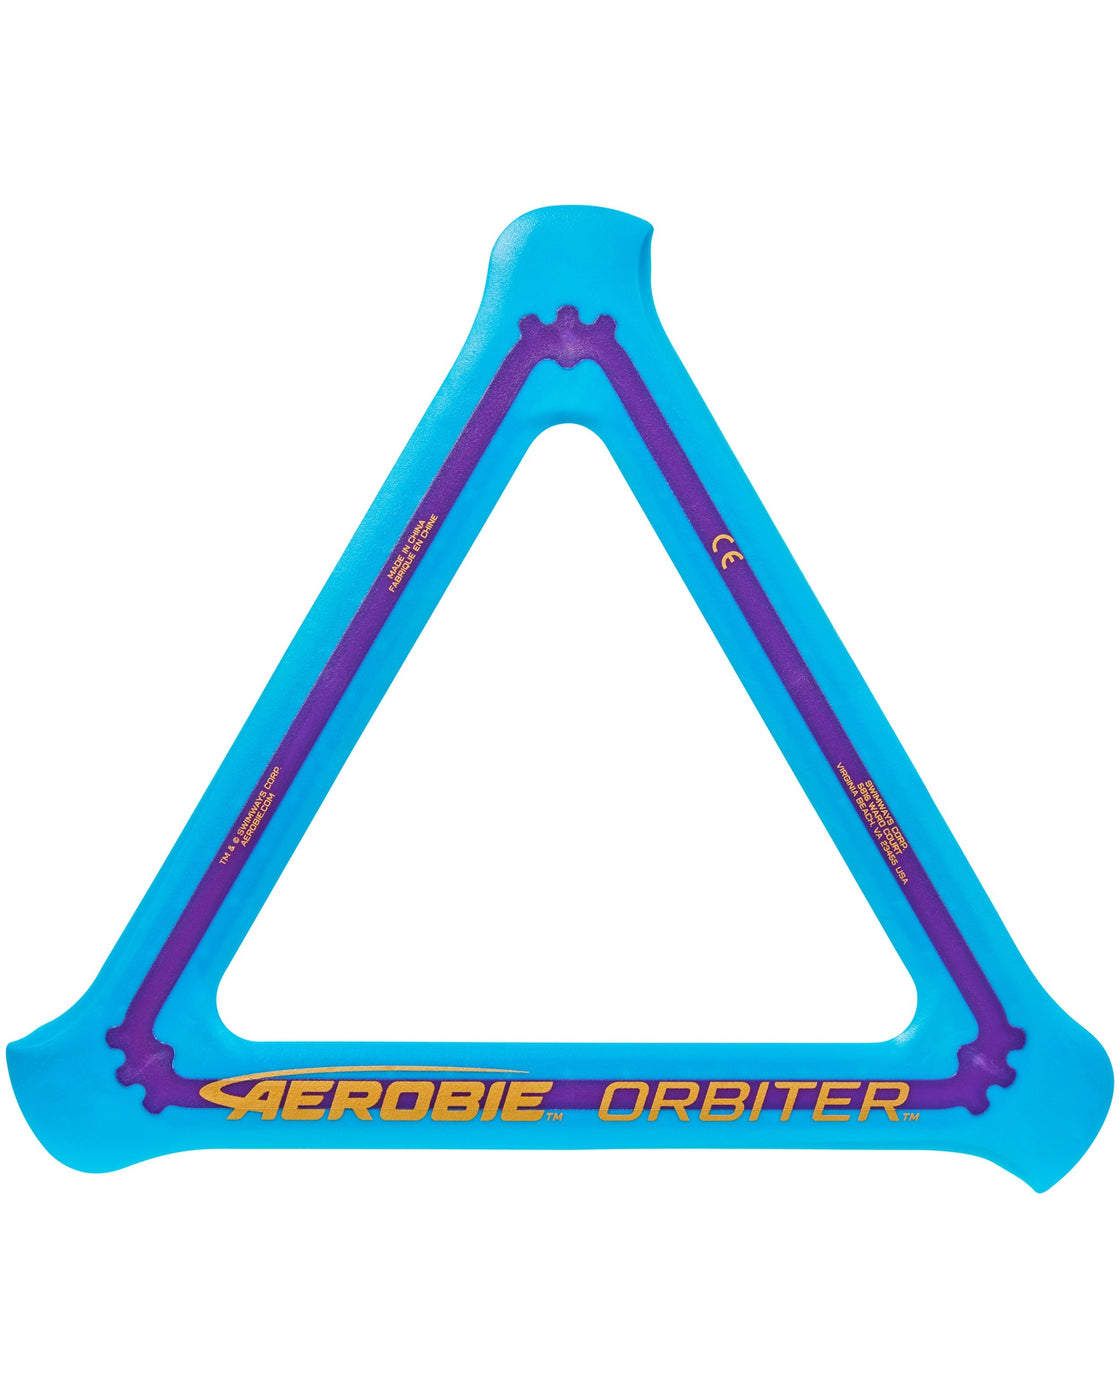 aerobie orbiter boomerang triangle